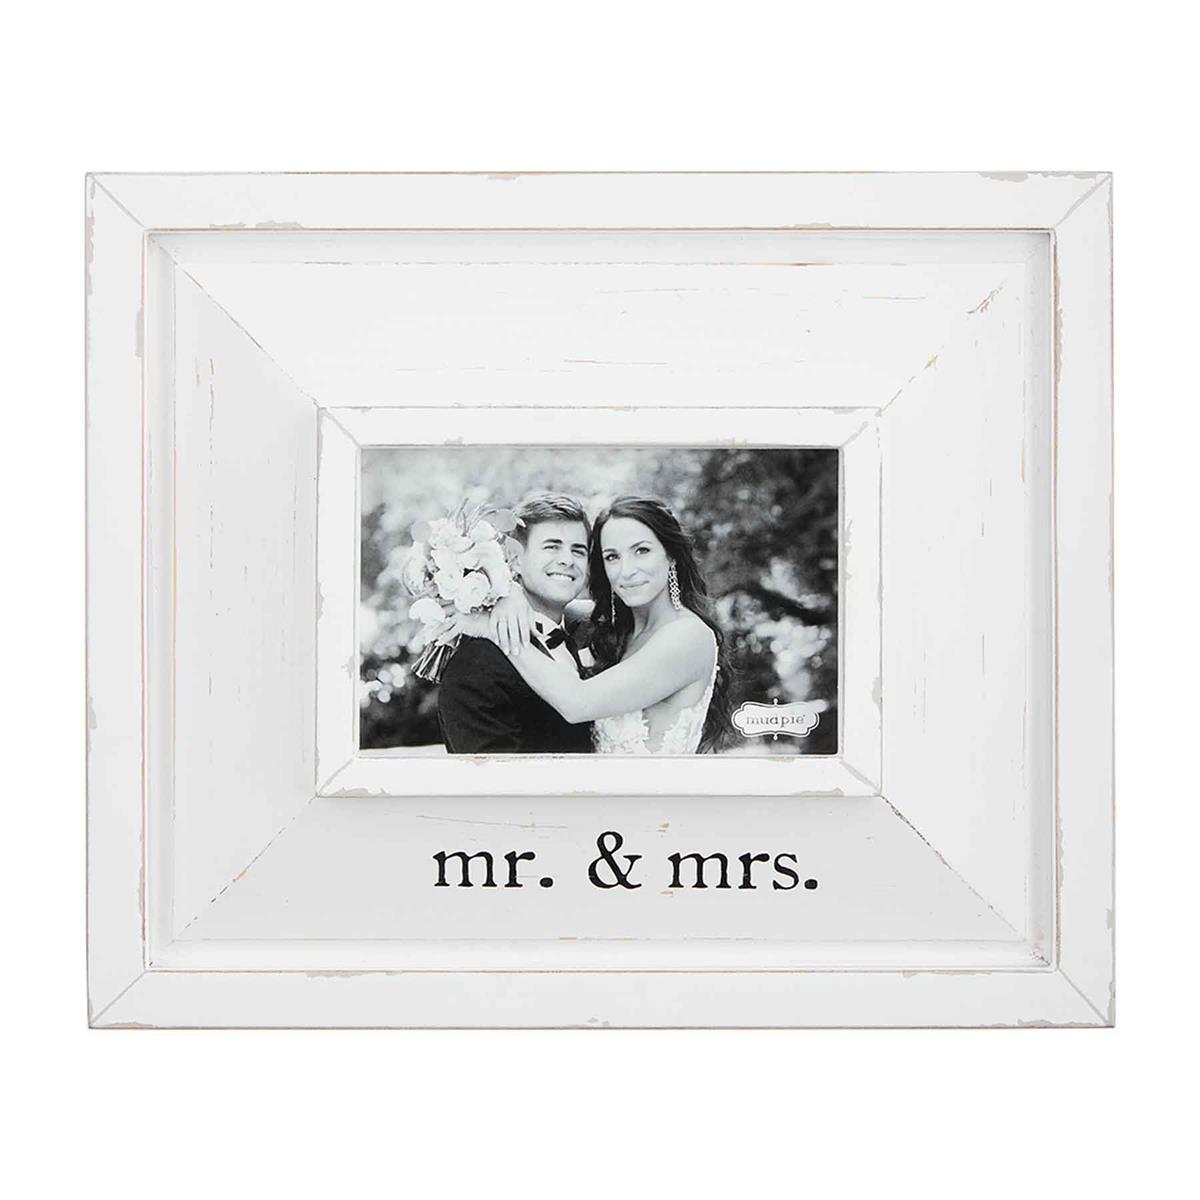 4x6 Photo Frame - Mr. & Mrs.